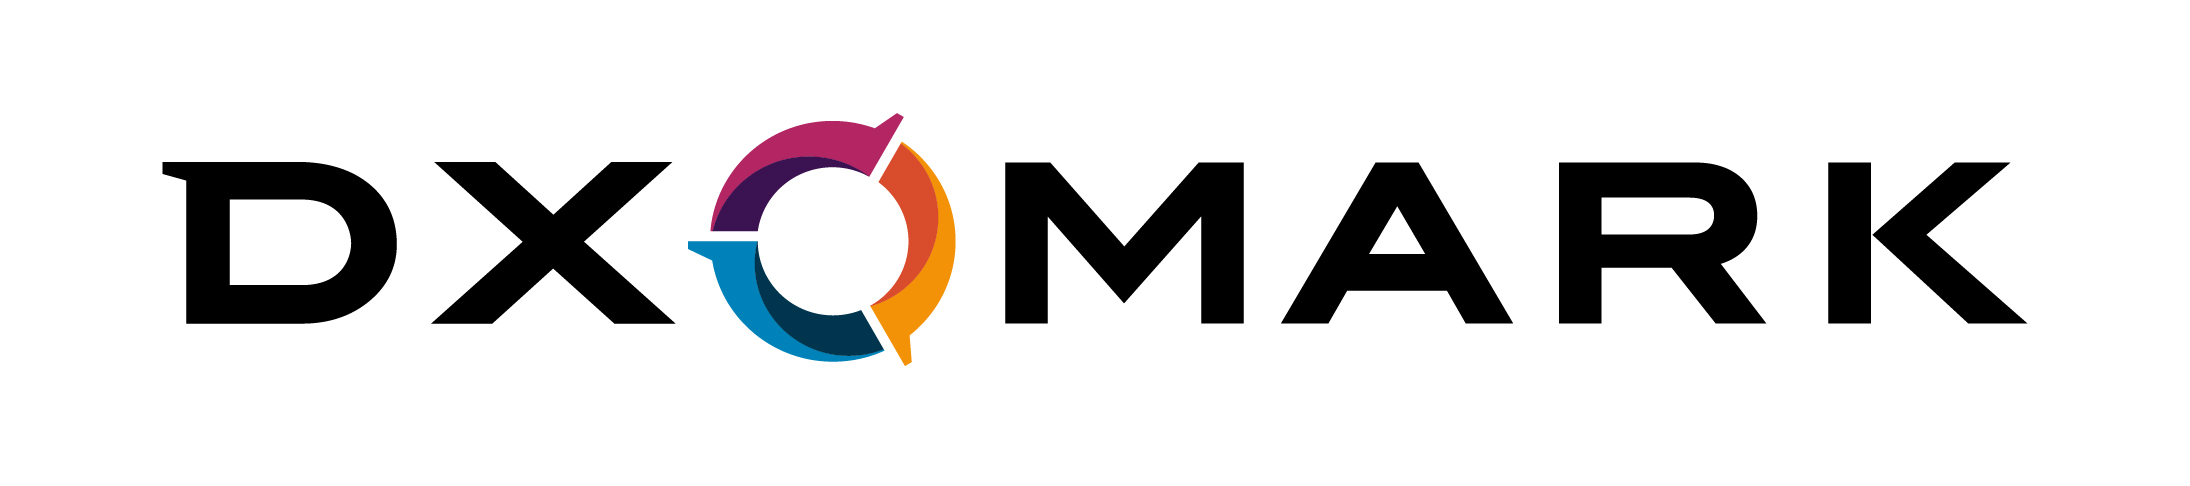 DXOMARK IMAGE LABS Logo